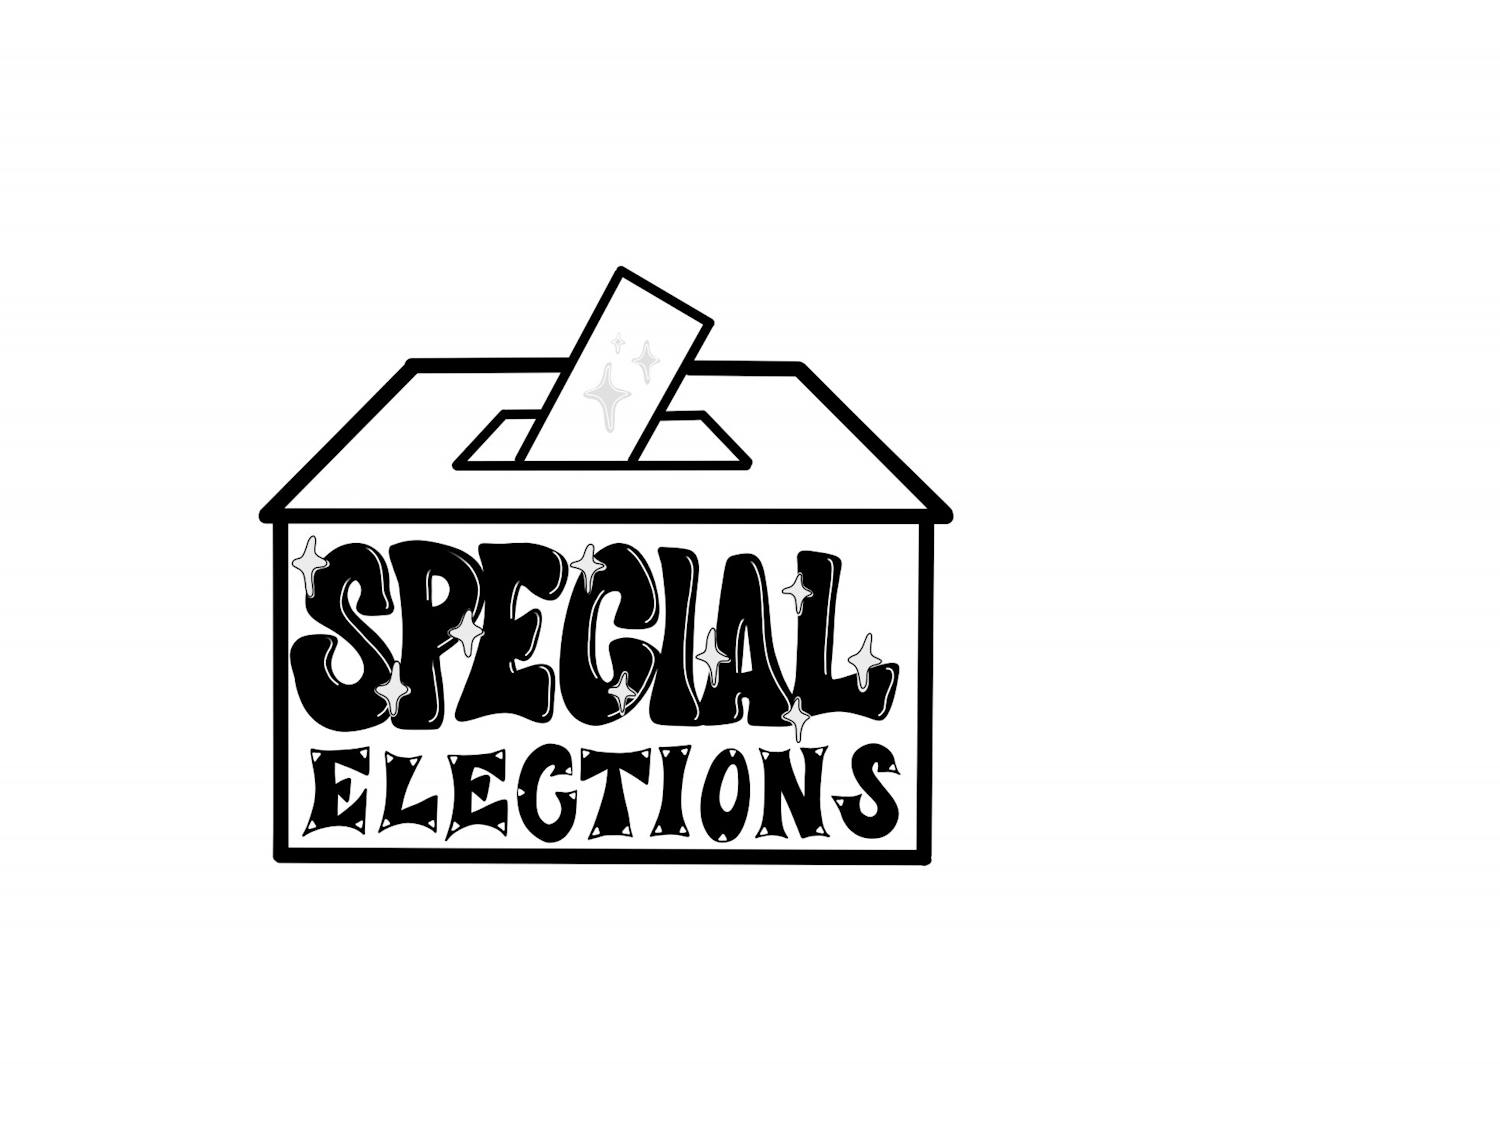 SGA Special Elections by Susanna Schatz.heic